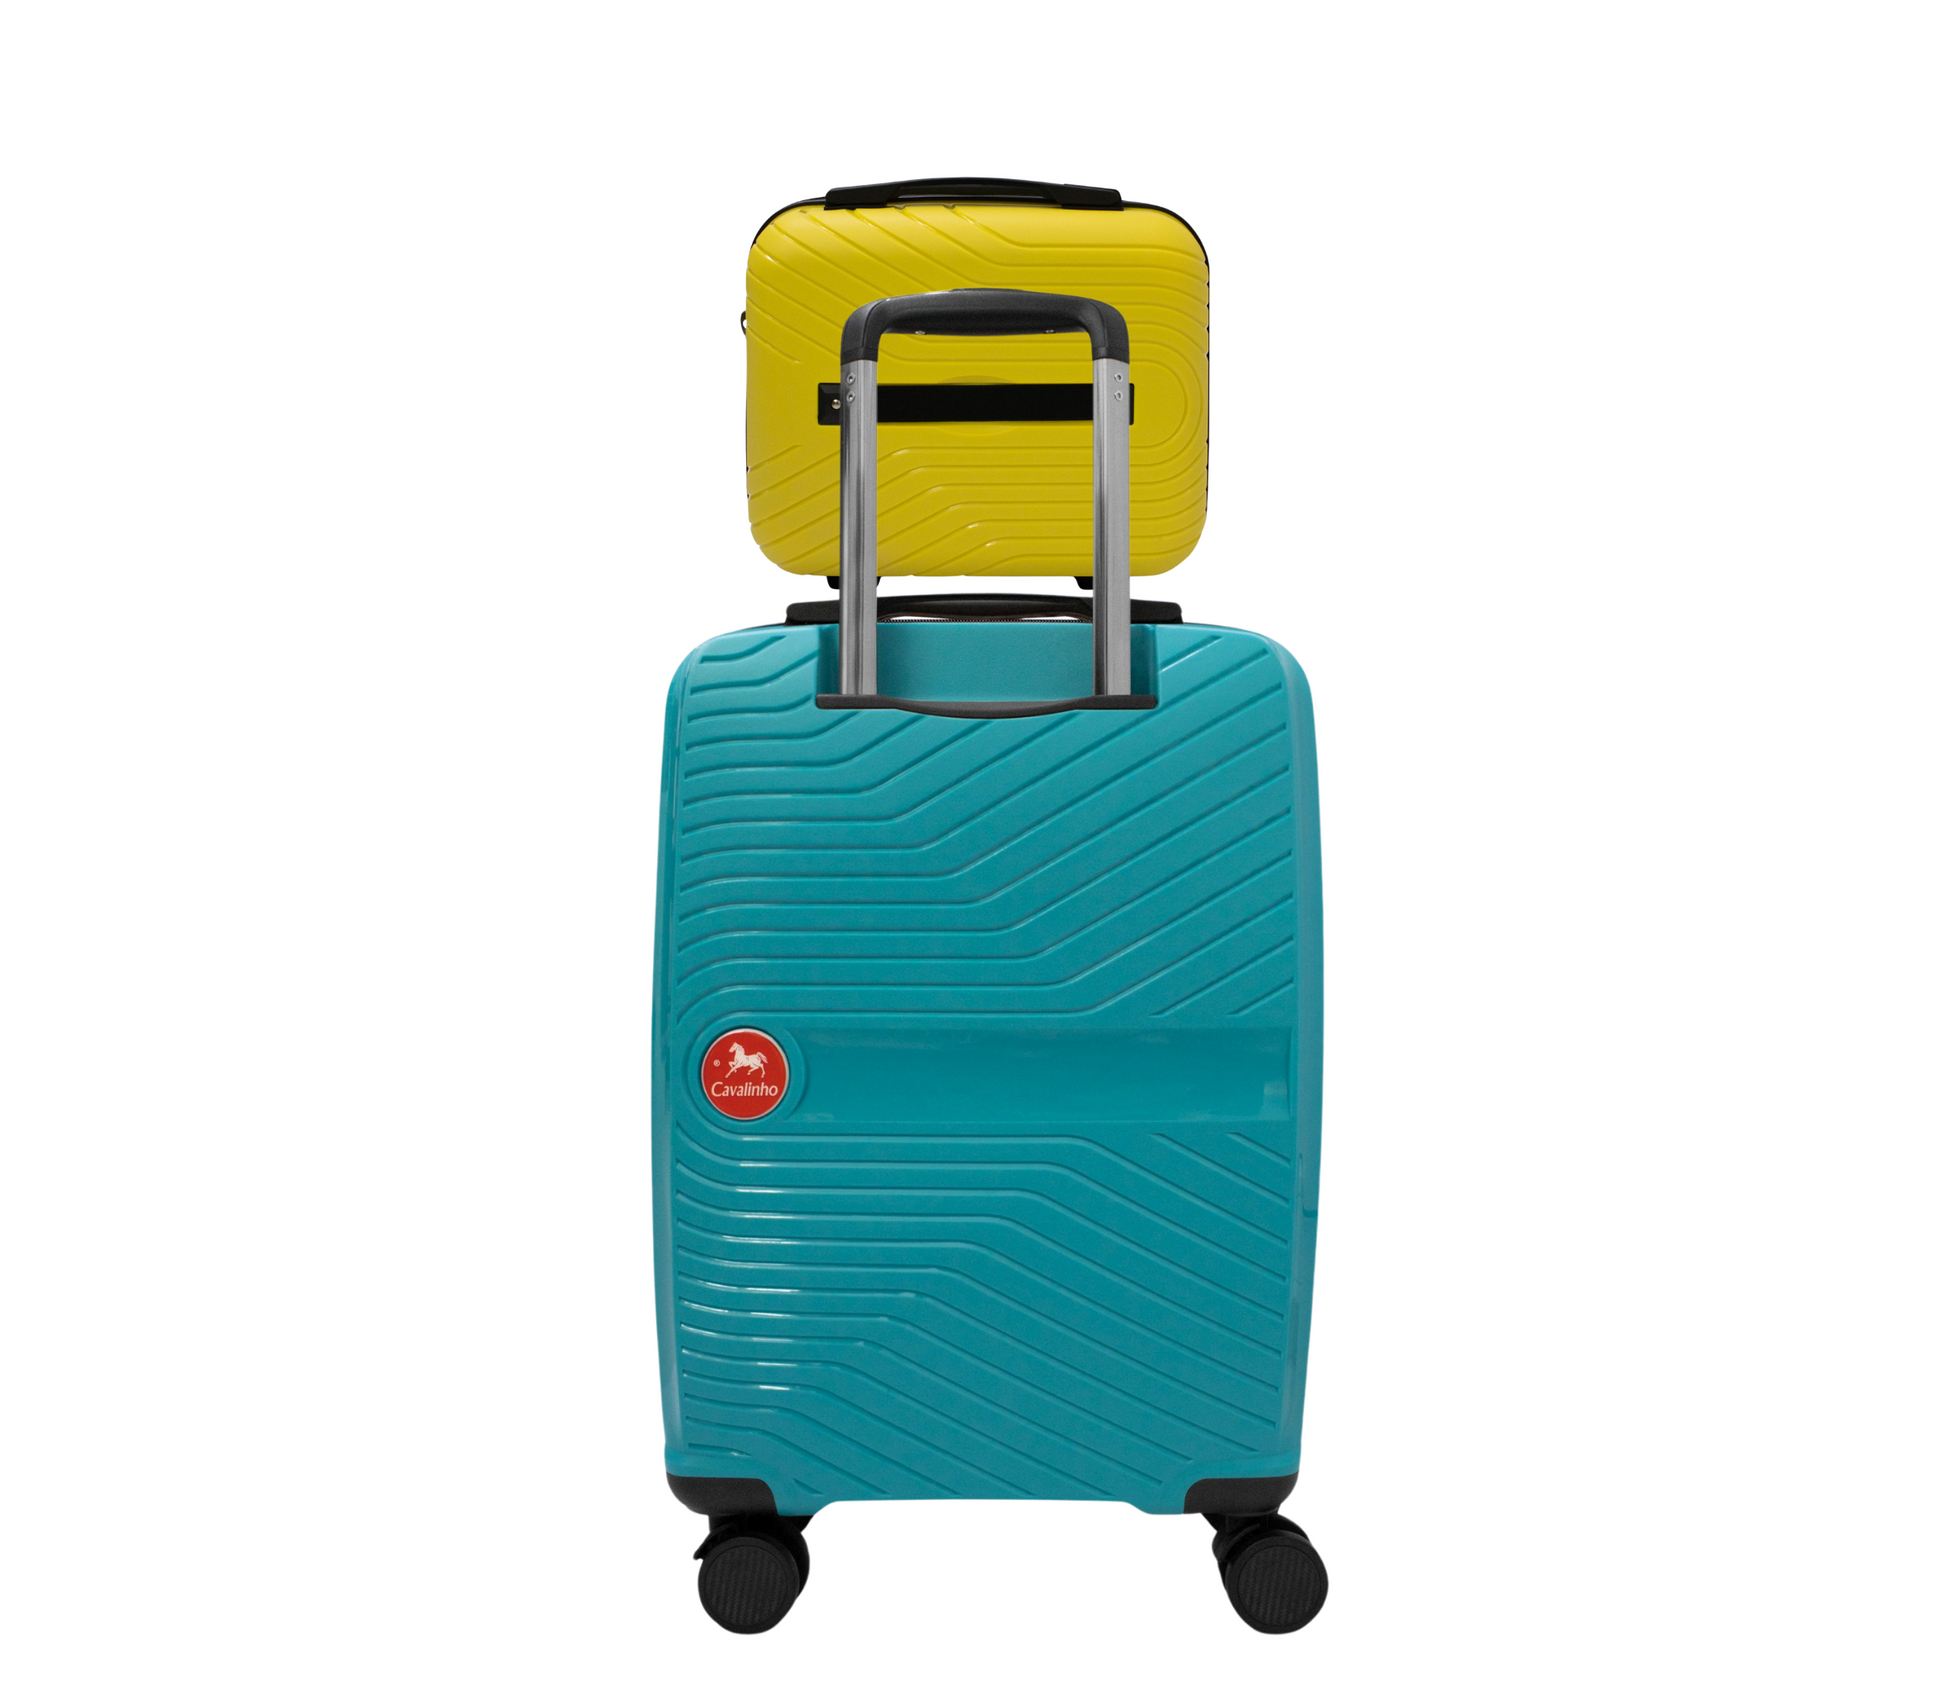 Cavalinho Canada & USA Colorful 2 Piece Luggage Set (15" & 19") - Yellow DarkTurquoise - 68020004.0825.S1519._2